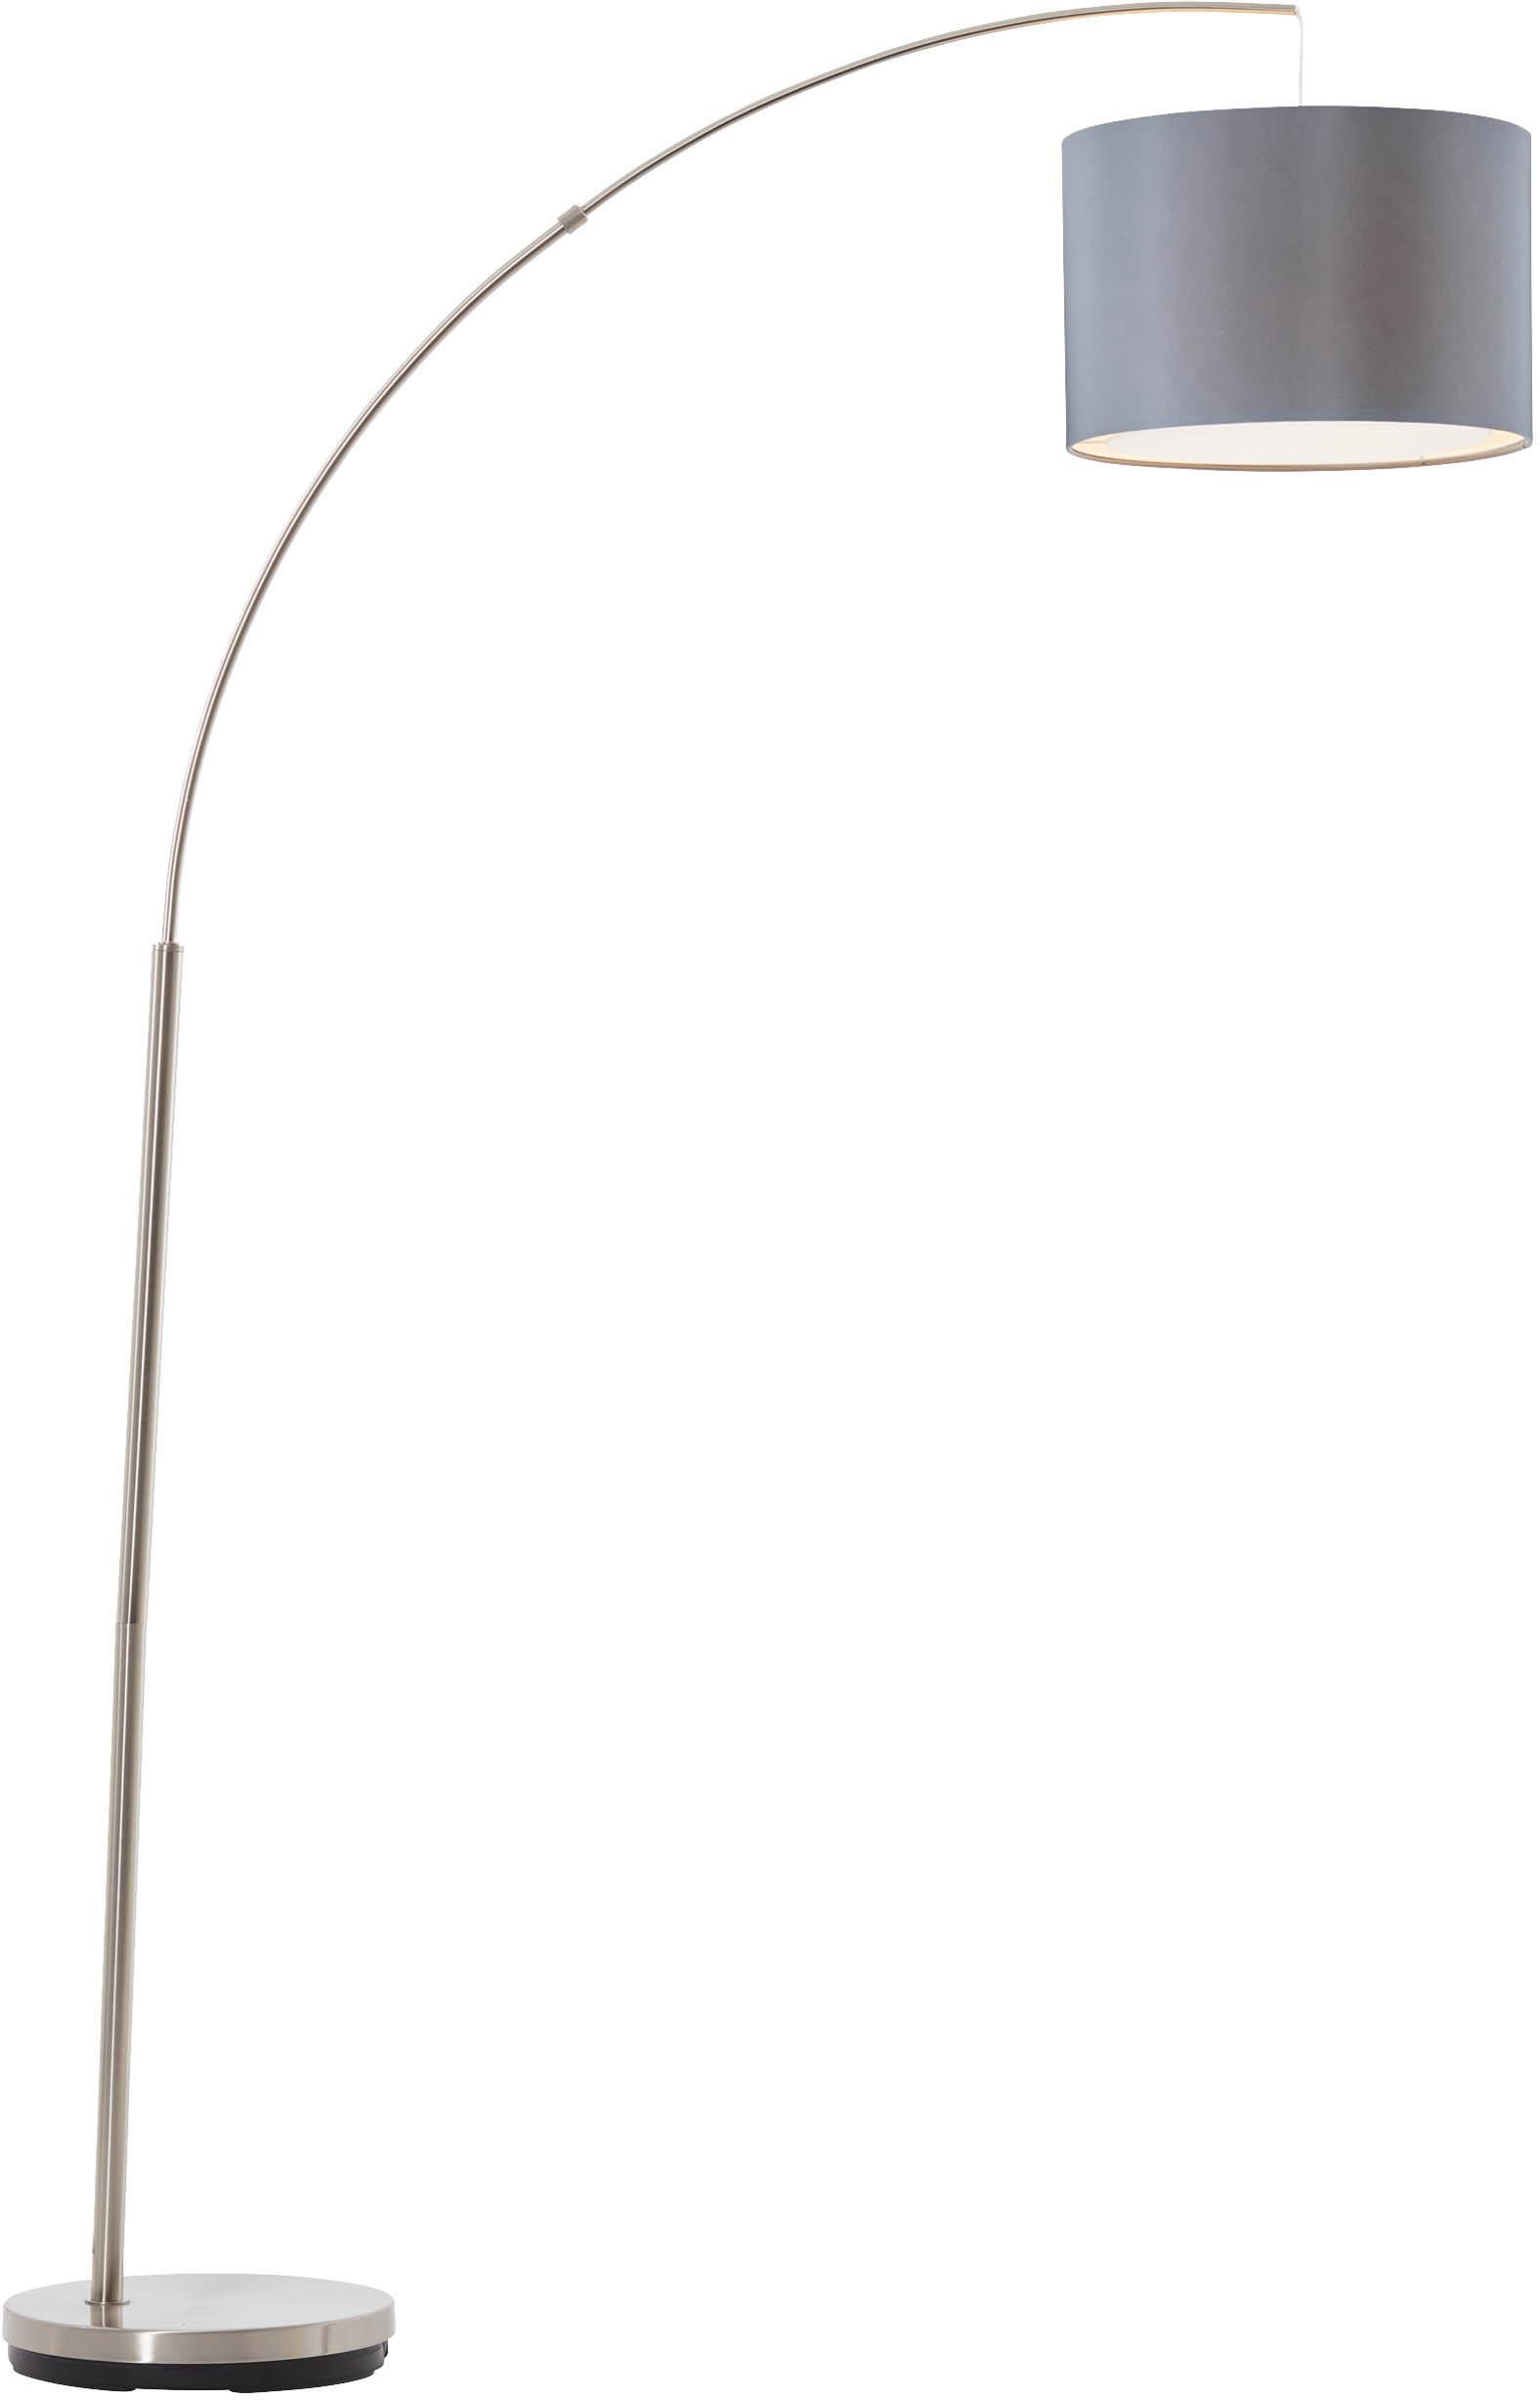 Brilliant Bogenlampe »Clarie«, 1 flammig-flammig, 29cm Höhe, E27 max. 60W, LED geeignet, mit grauem Textilschirm